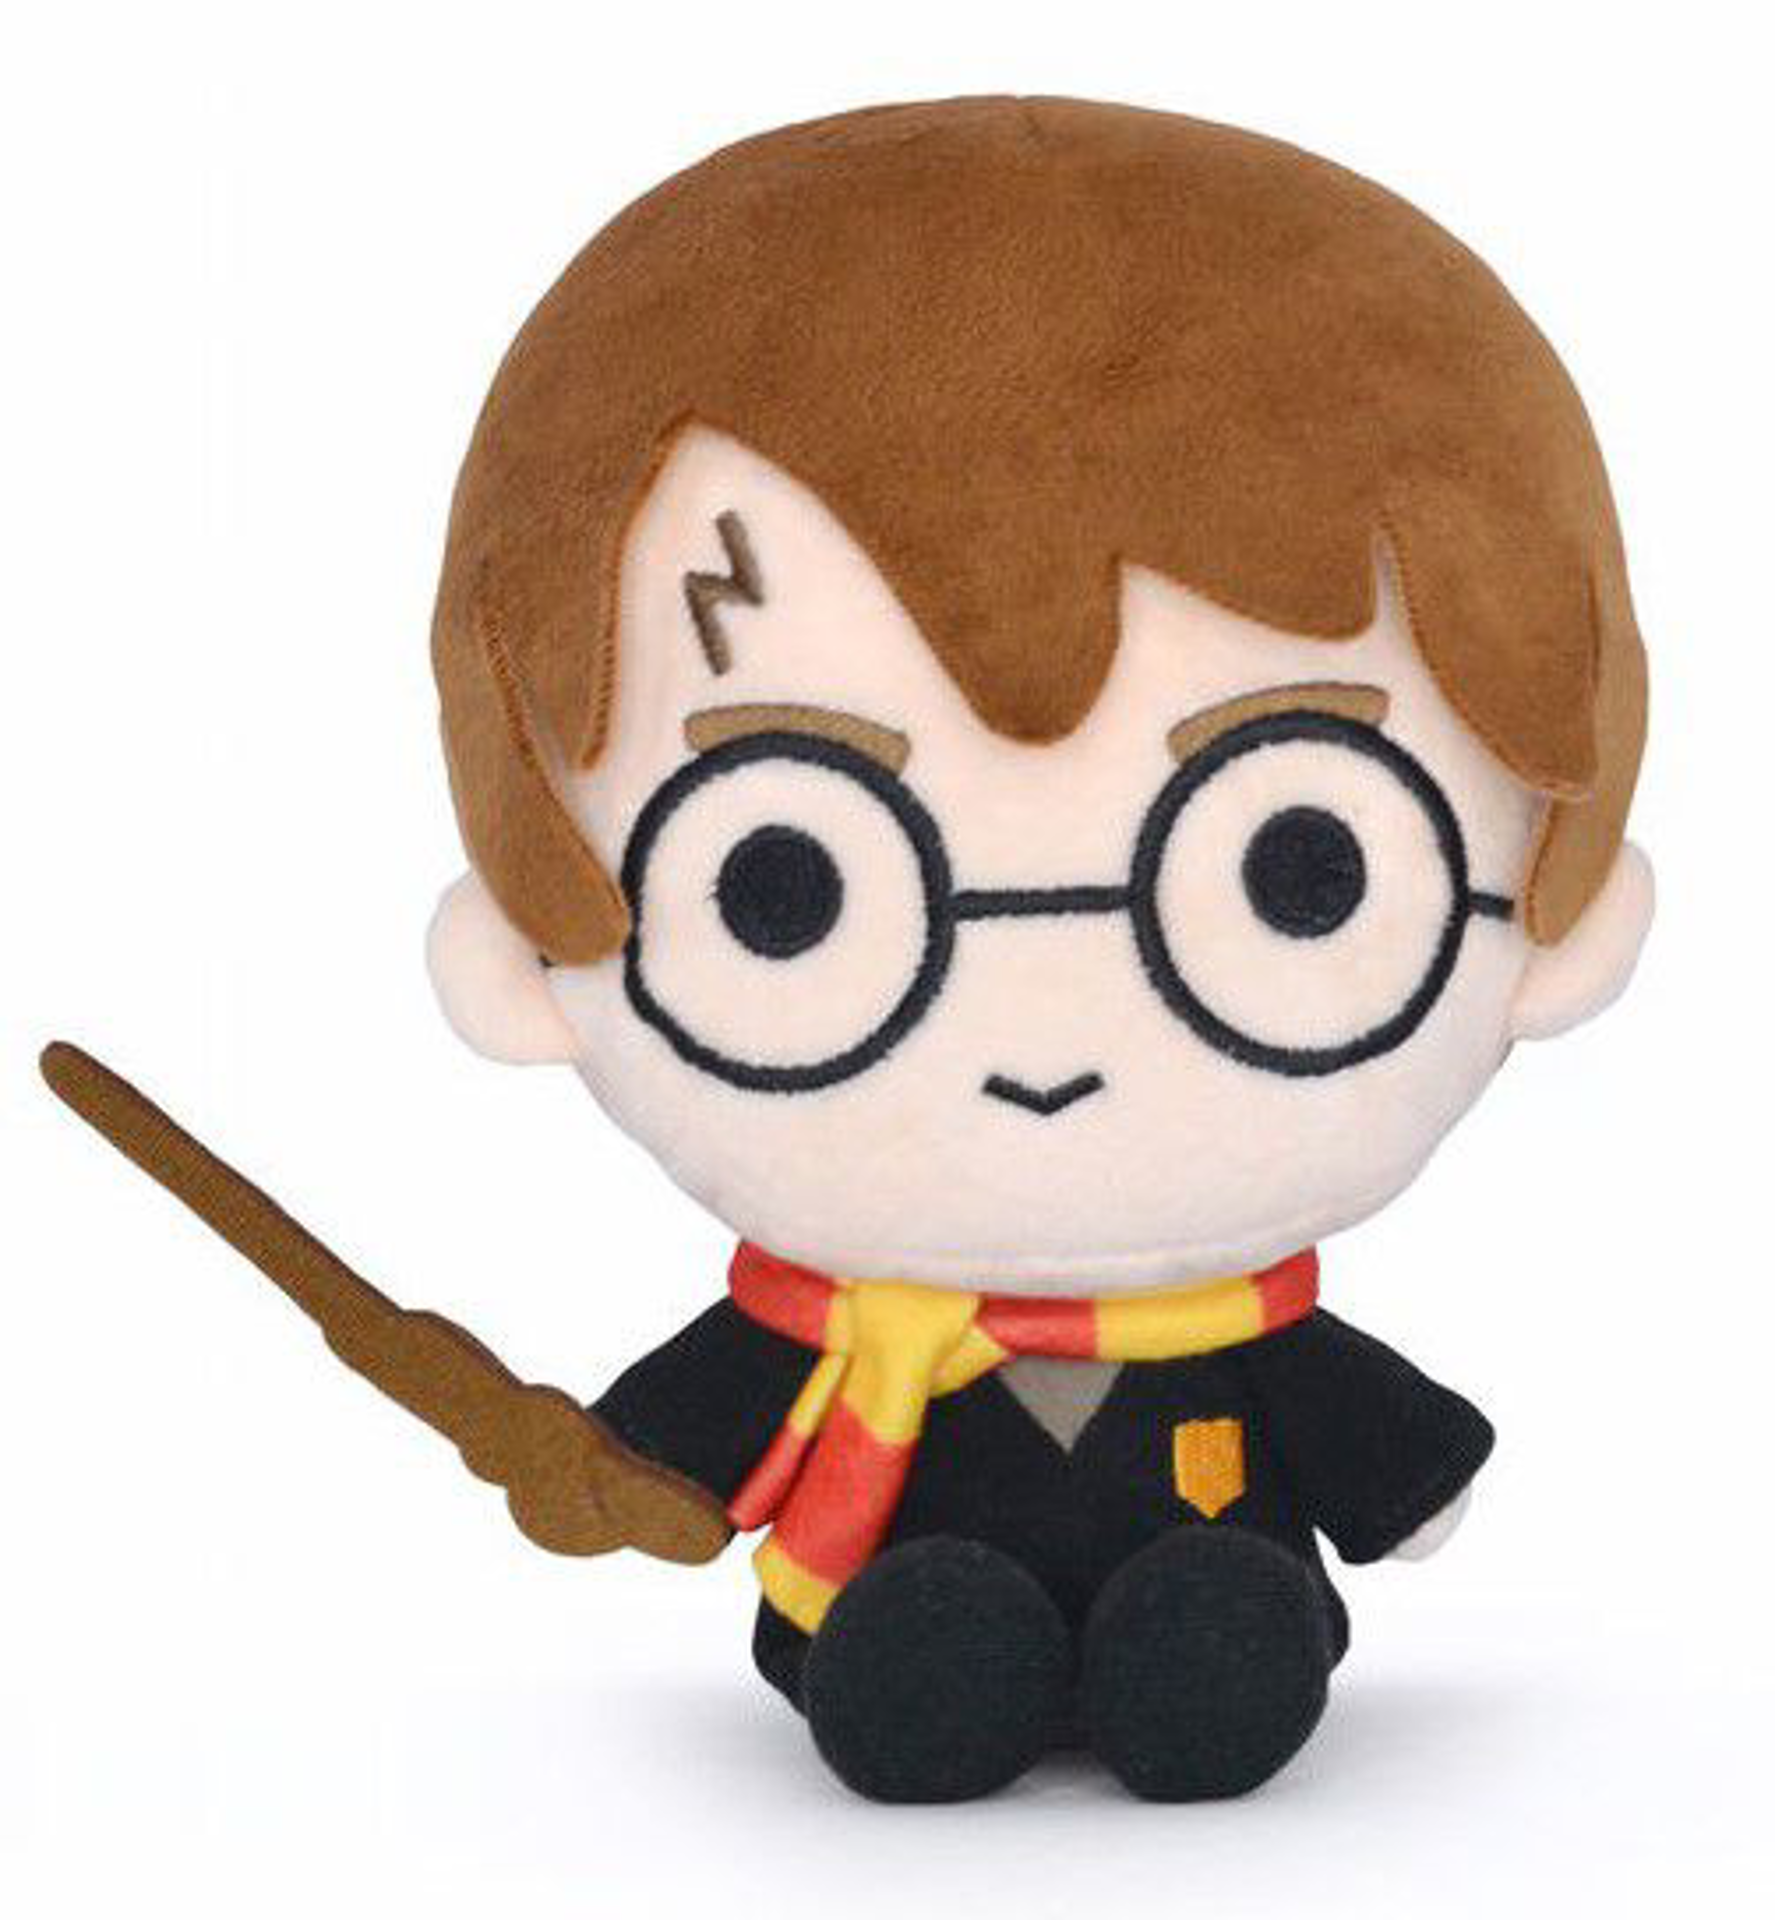 Harry Potter - Peluche Harry Chibi 20 cm (Harry Potter, Ron Weasley, Hermione Granger, Hedwige - livraison aléatoire)